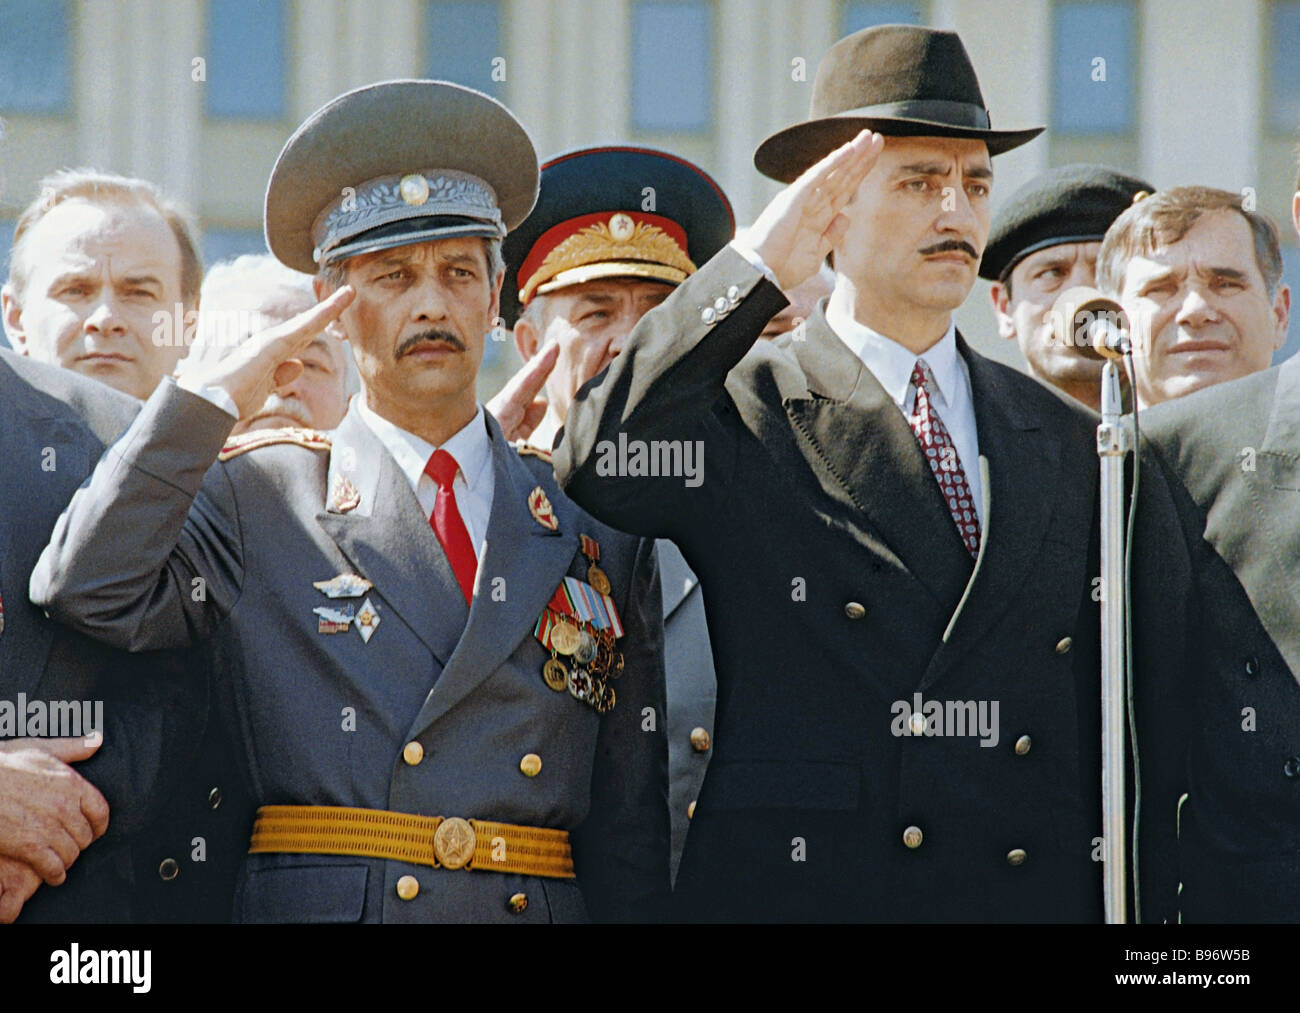 president-dzhokhar-dudayev-right-reviewing-a-troop-parade-in-grozny-B96W5B.jpg